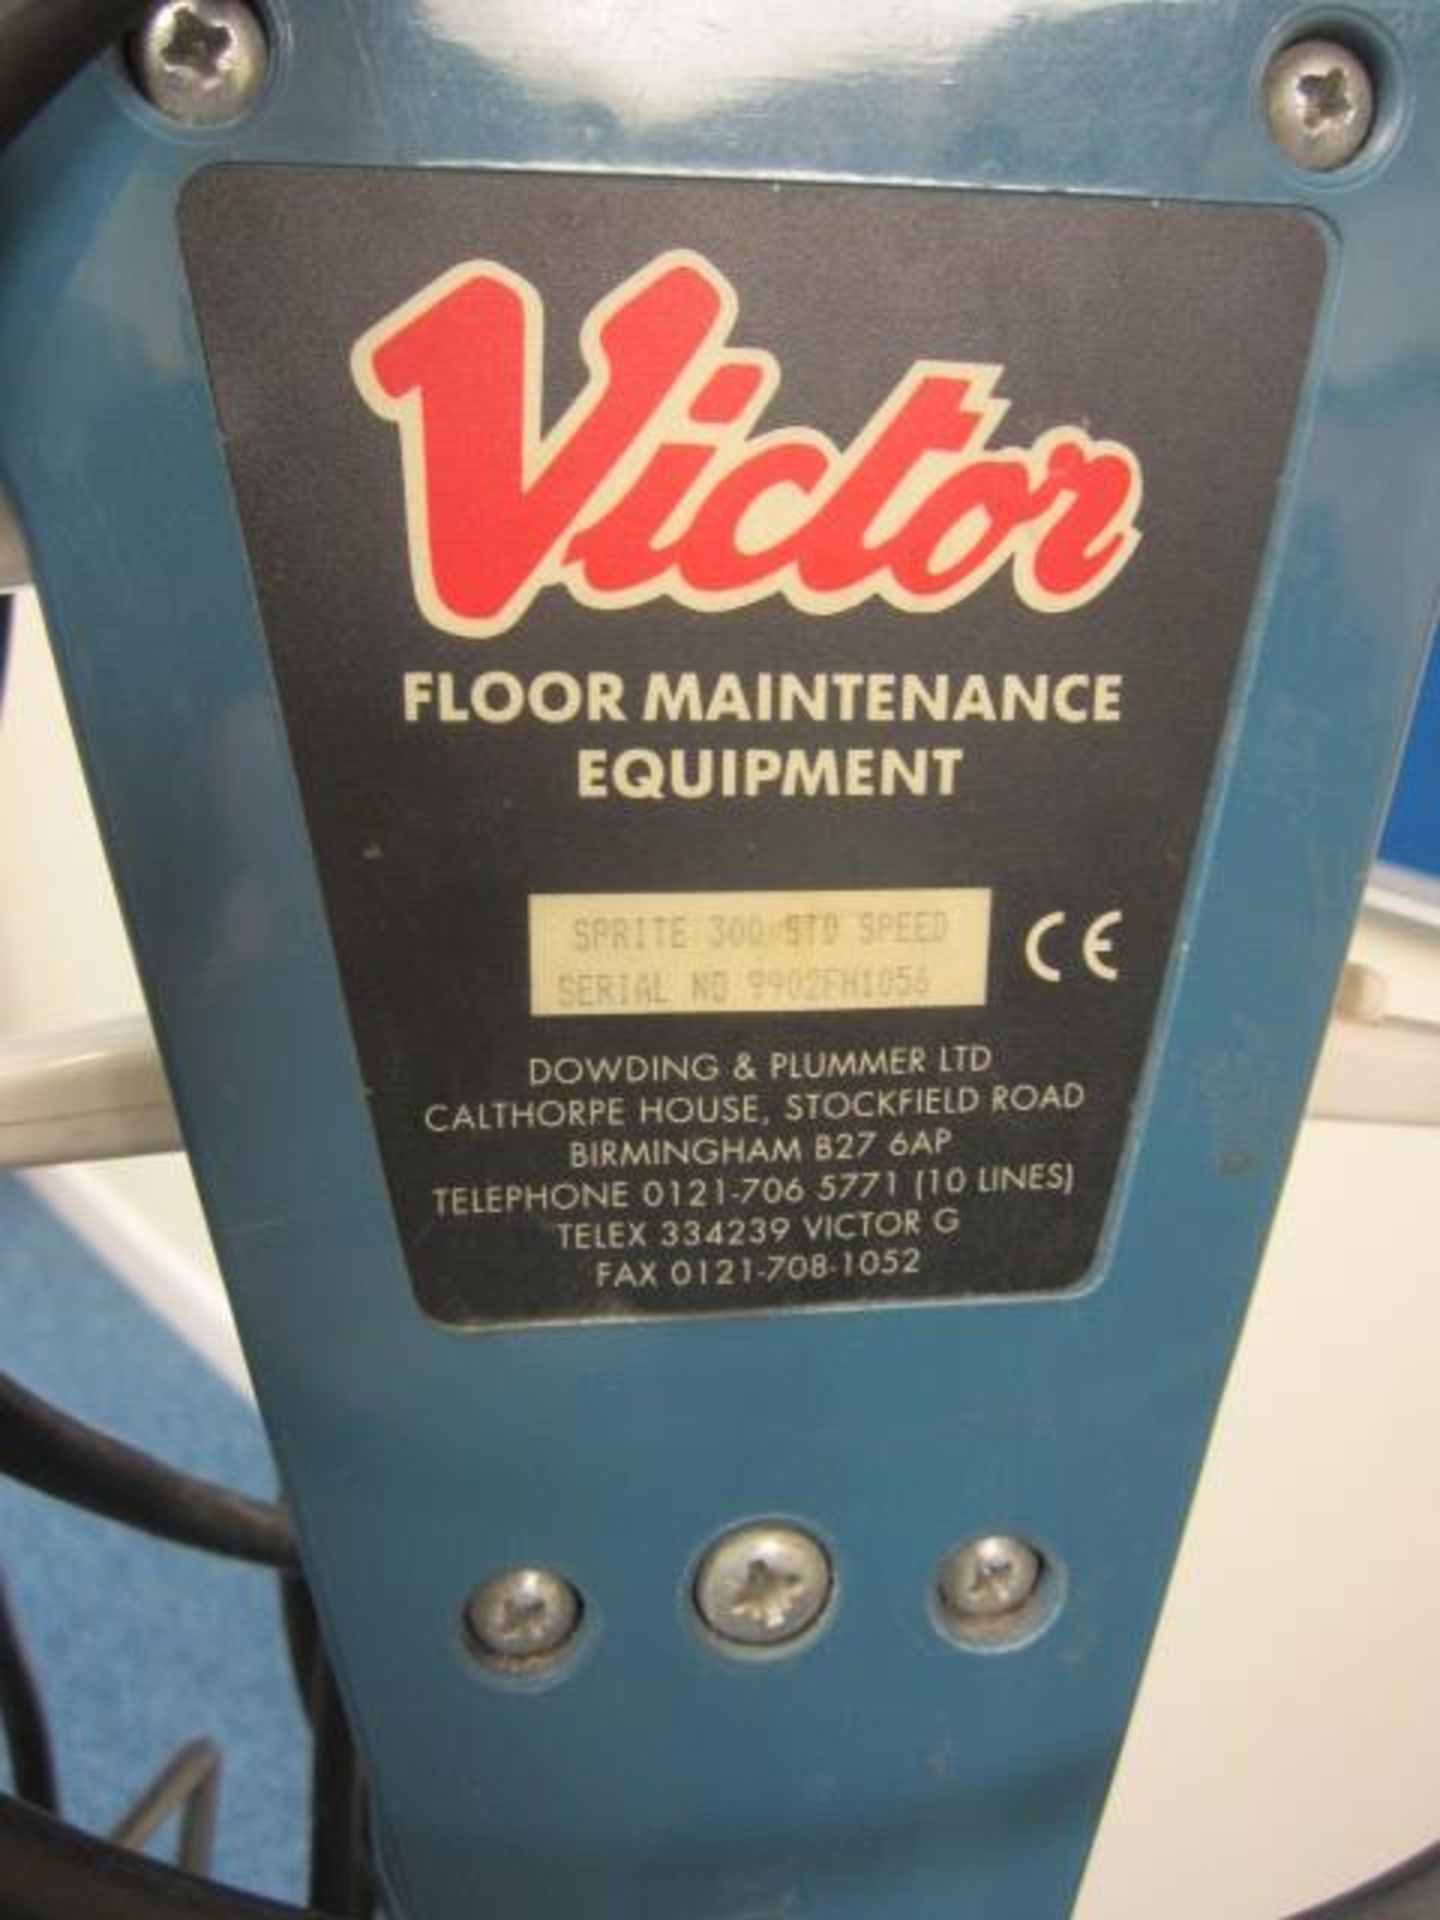 Victor Sprite 300 floor polisher, serial no. 9902 FH1056, 240v - Image 4 of 4